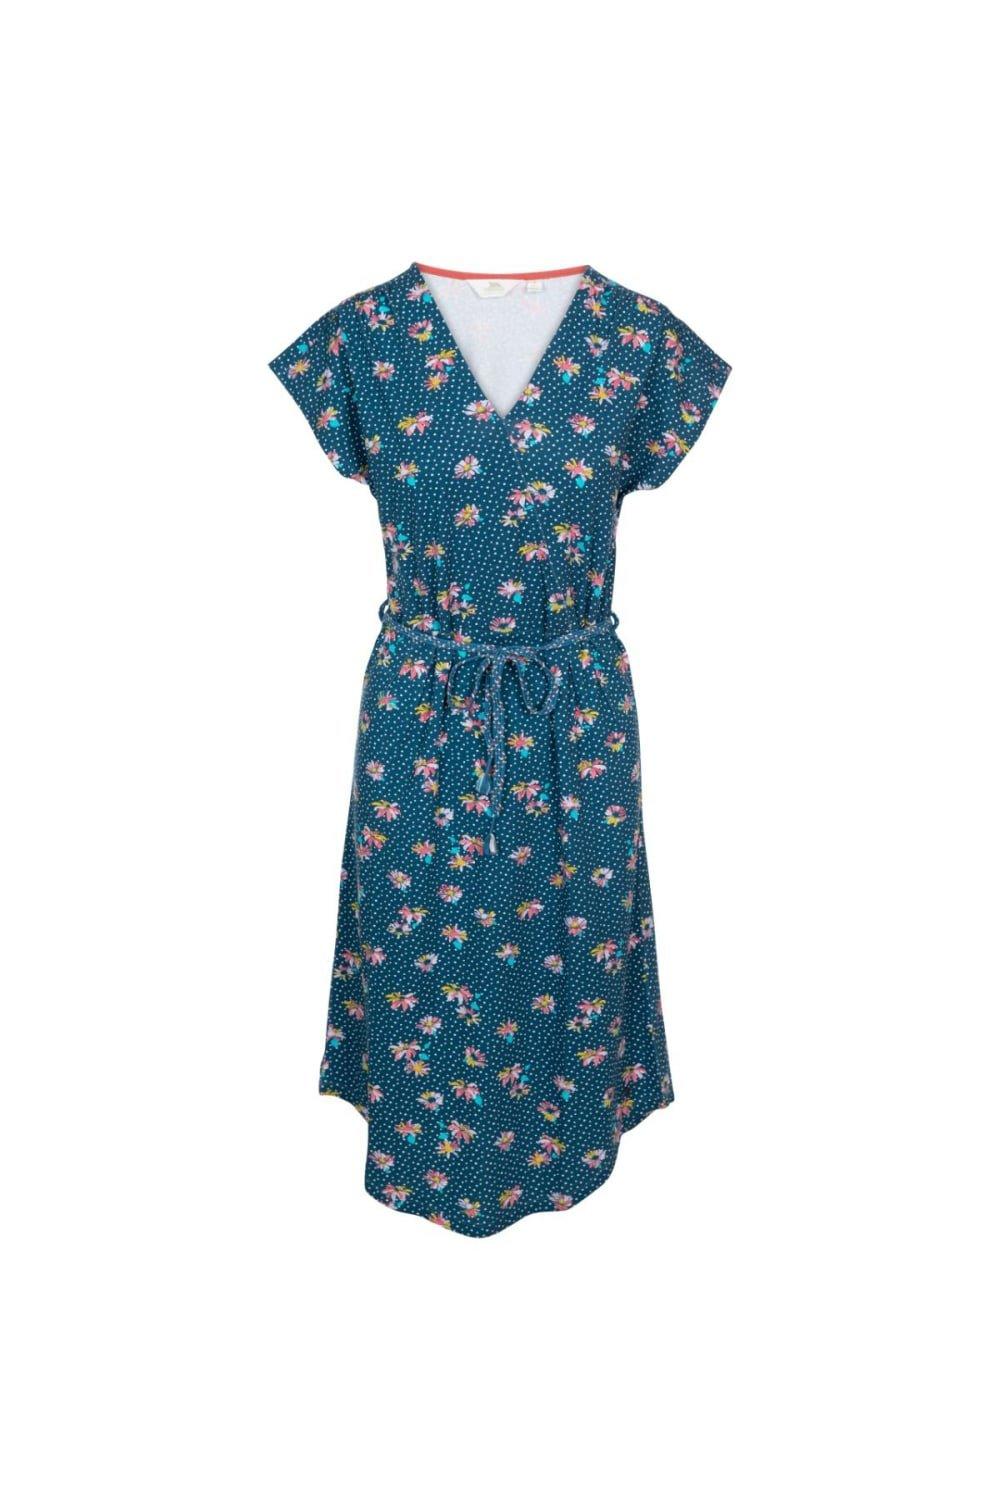 Trespass Women's Una Casual Dress|Size: S|blue